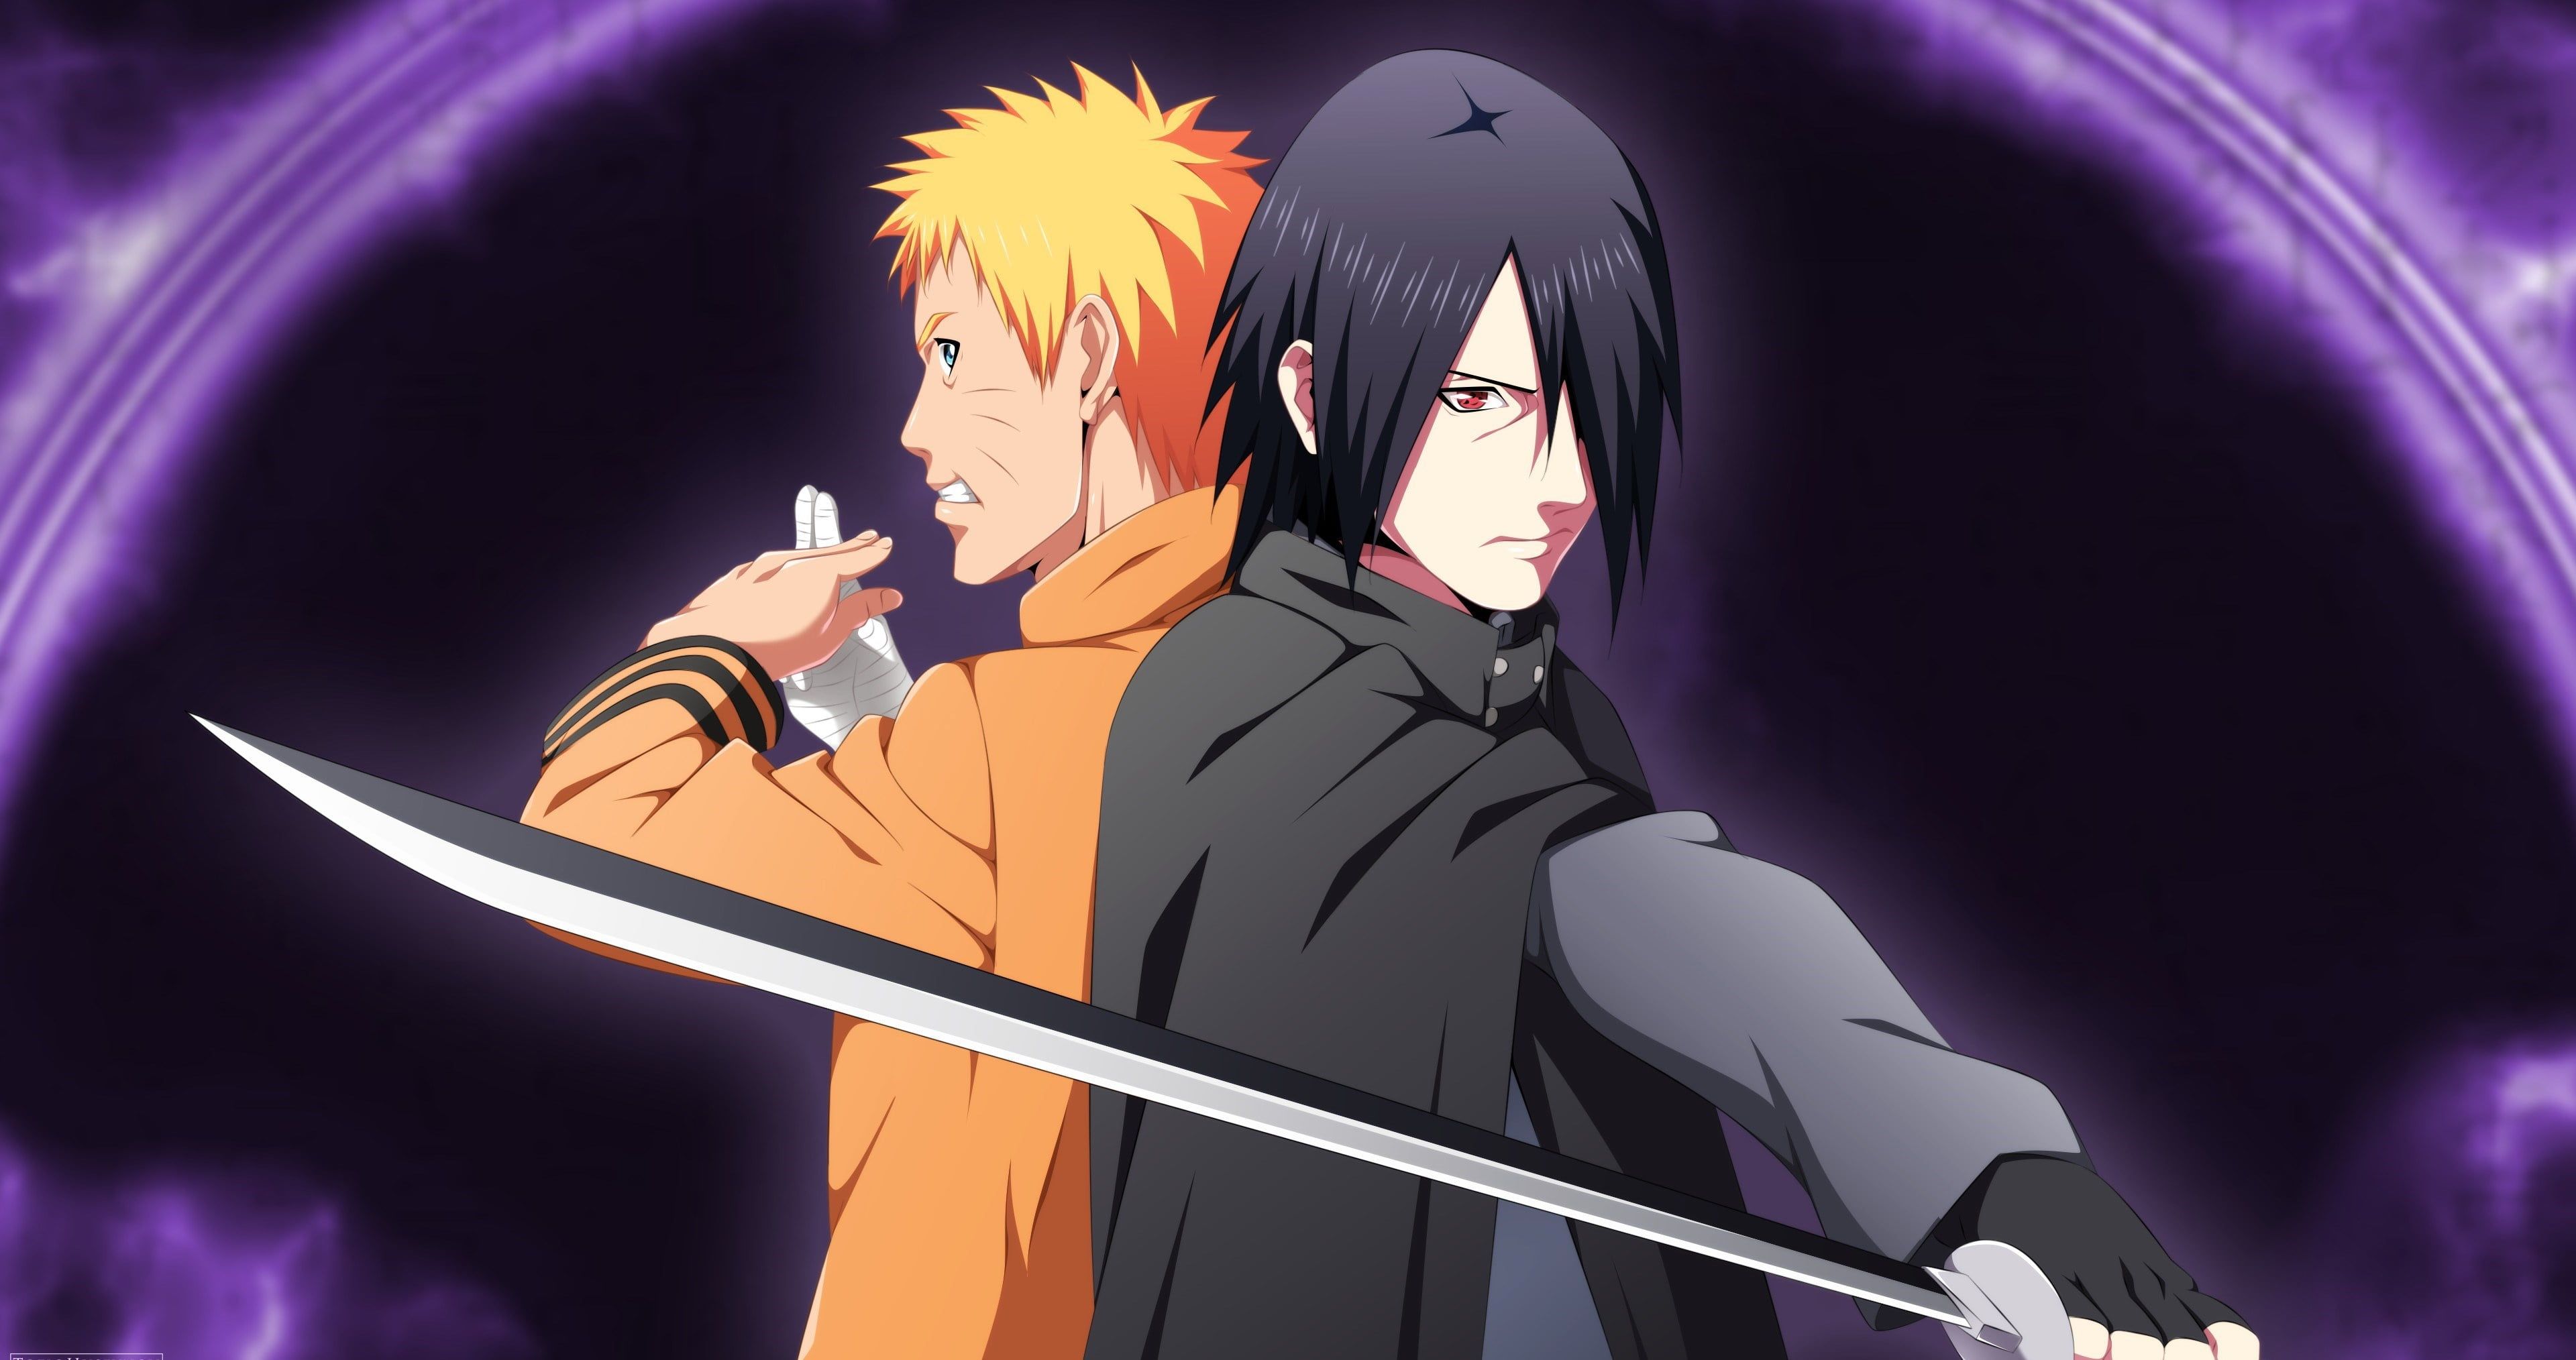 Naruto characters wallpaper, sword, game, Sasuke, Naruto, anime